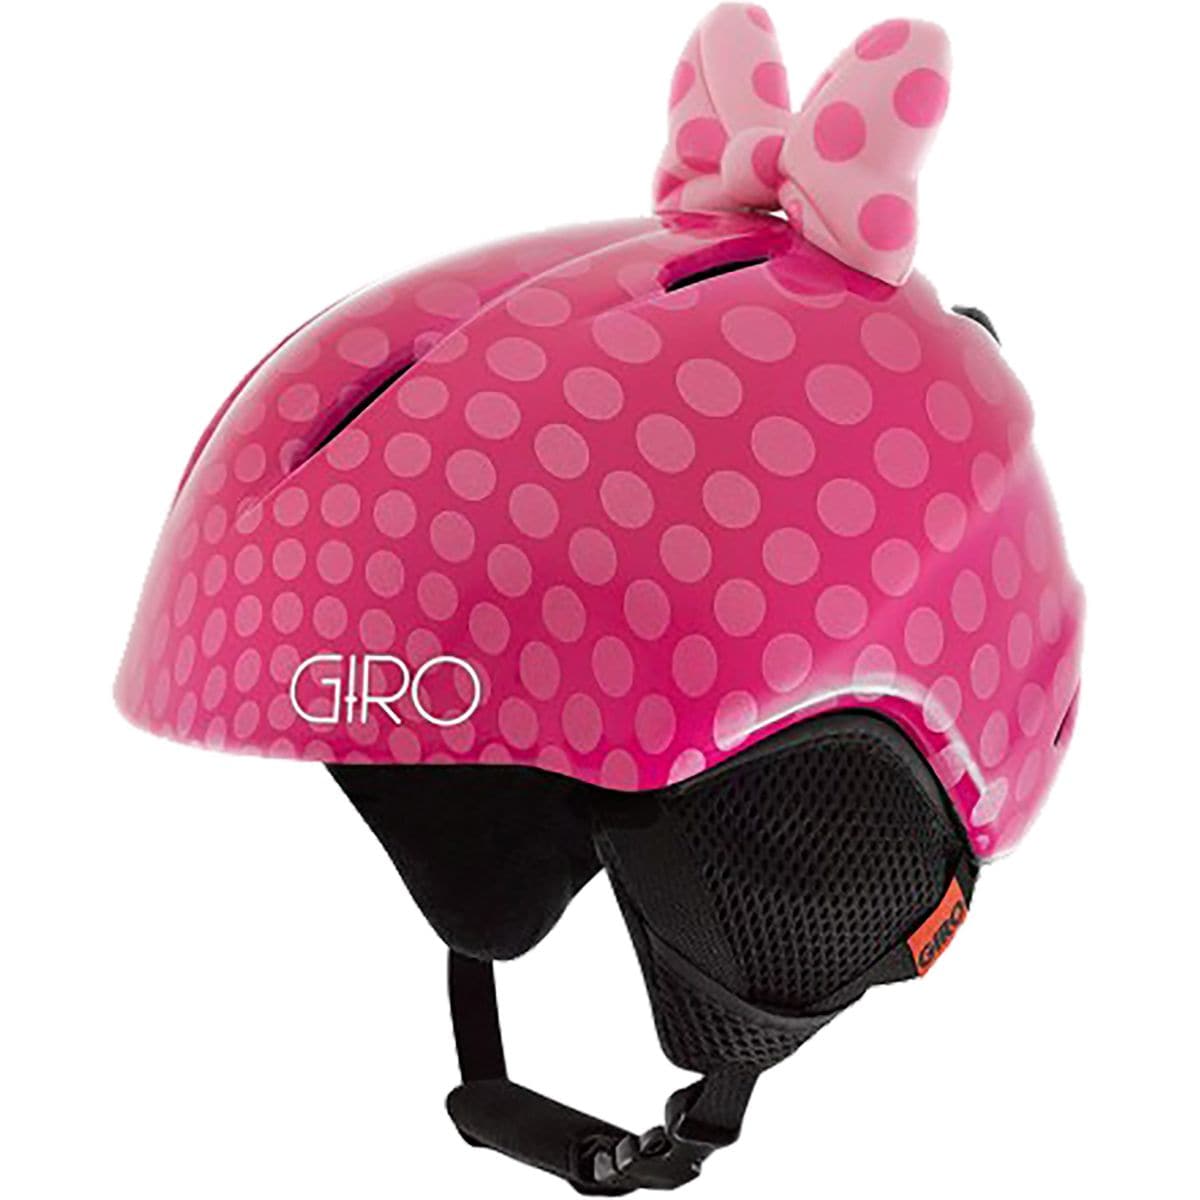 Giro Launch Plus Helmet - Kids' Pink Bow